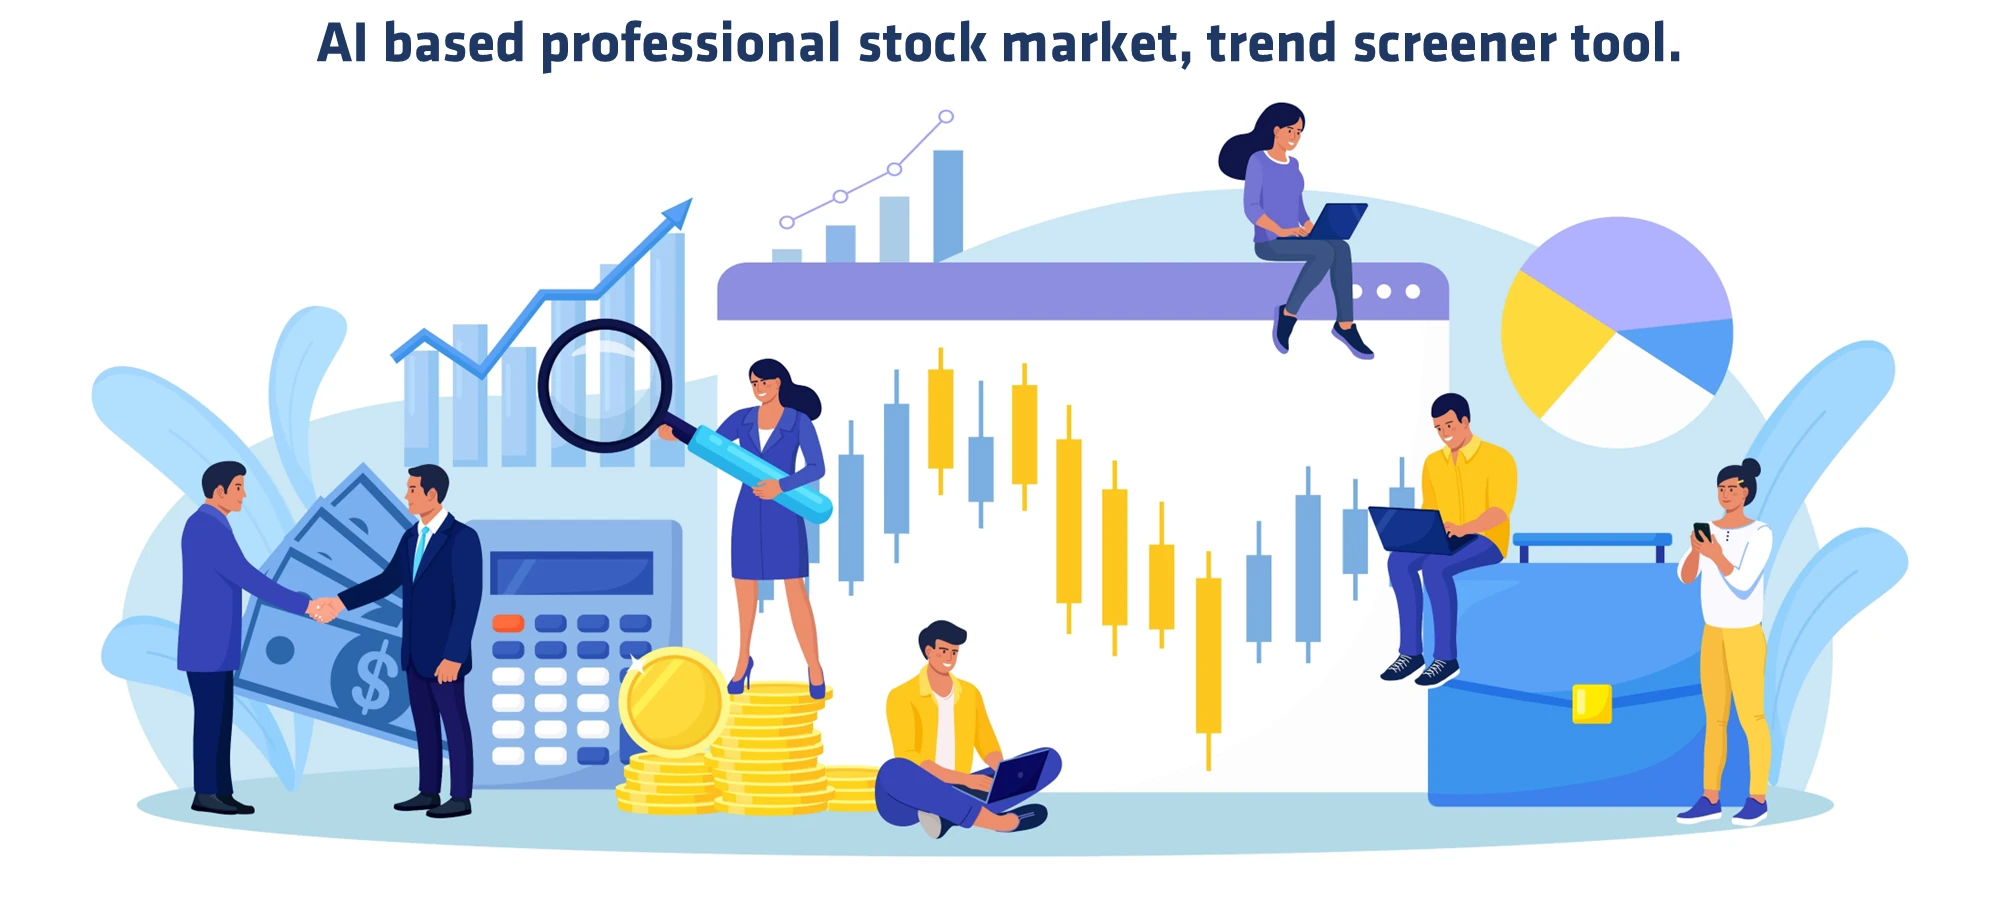 TradeIndicators, an AI based professional stock market, trend screener tool